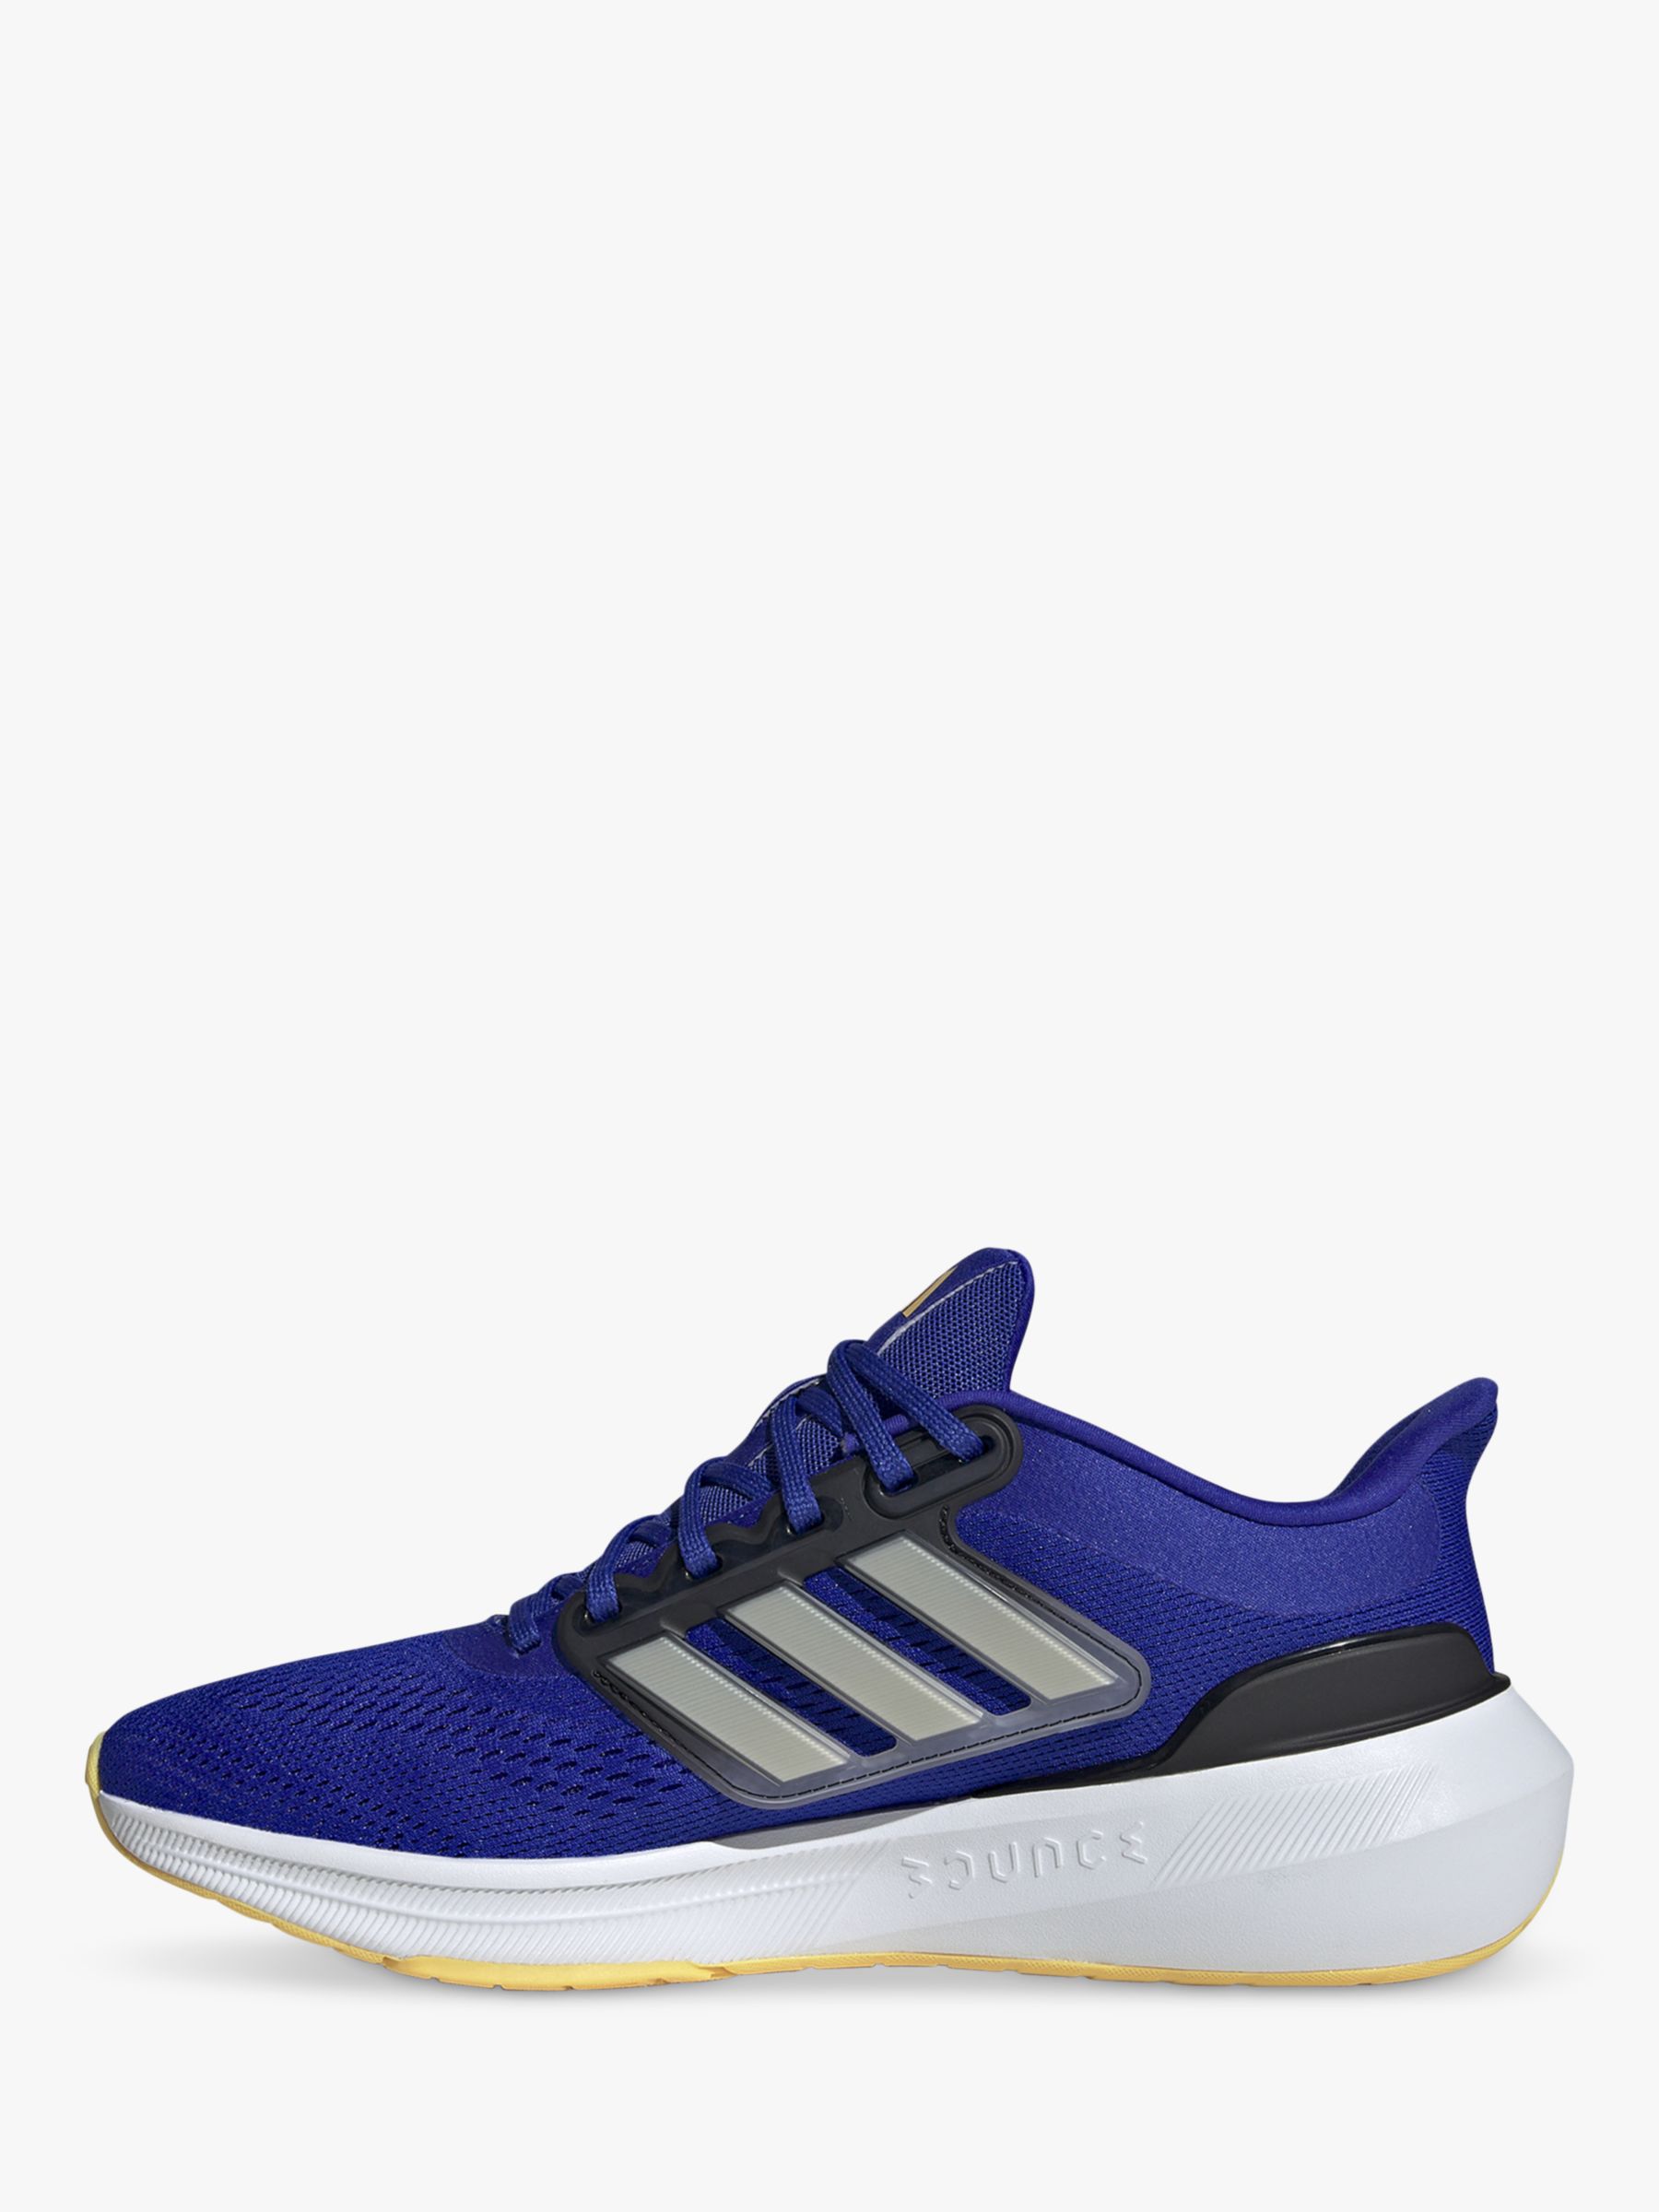 adidas Ultrabounce Men's Running Shoes, Lucid Blue/Grey, 7